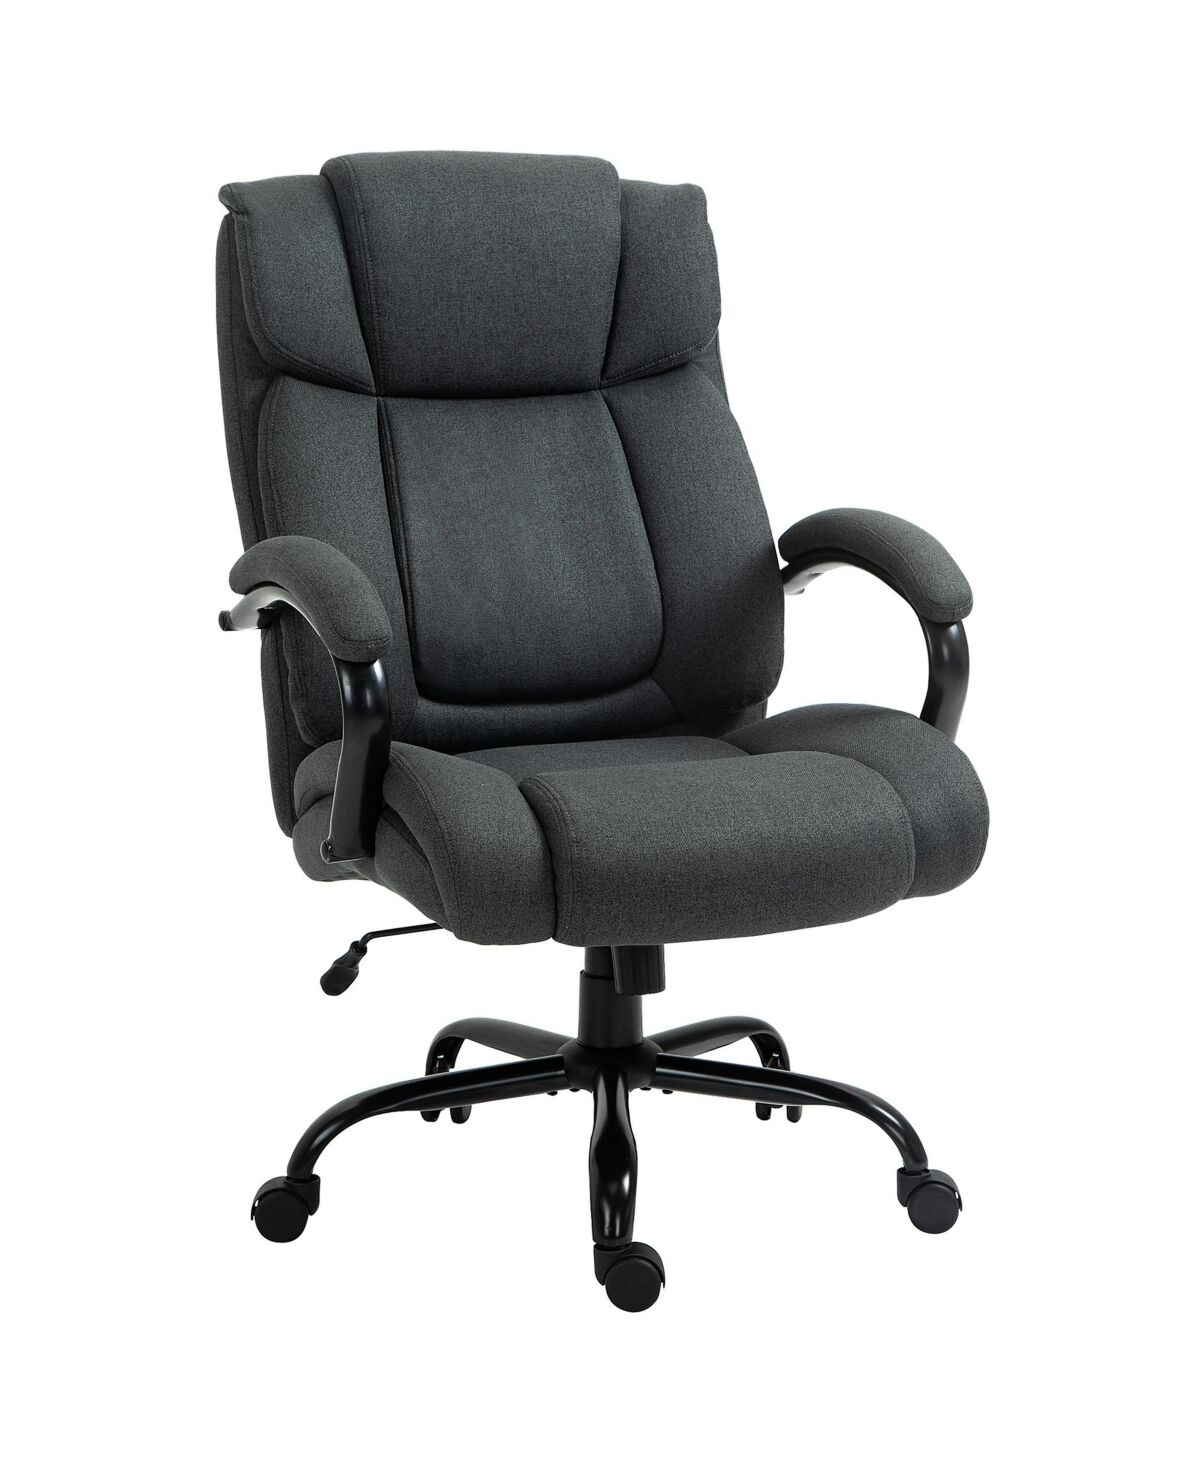 Vinsetto Big & Tall Office Chair Executive Swivel Ergonomic Desk Seat Rocker - Charcoal grey